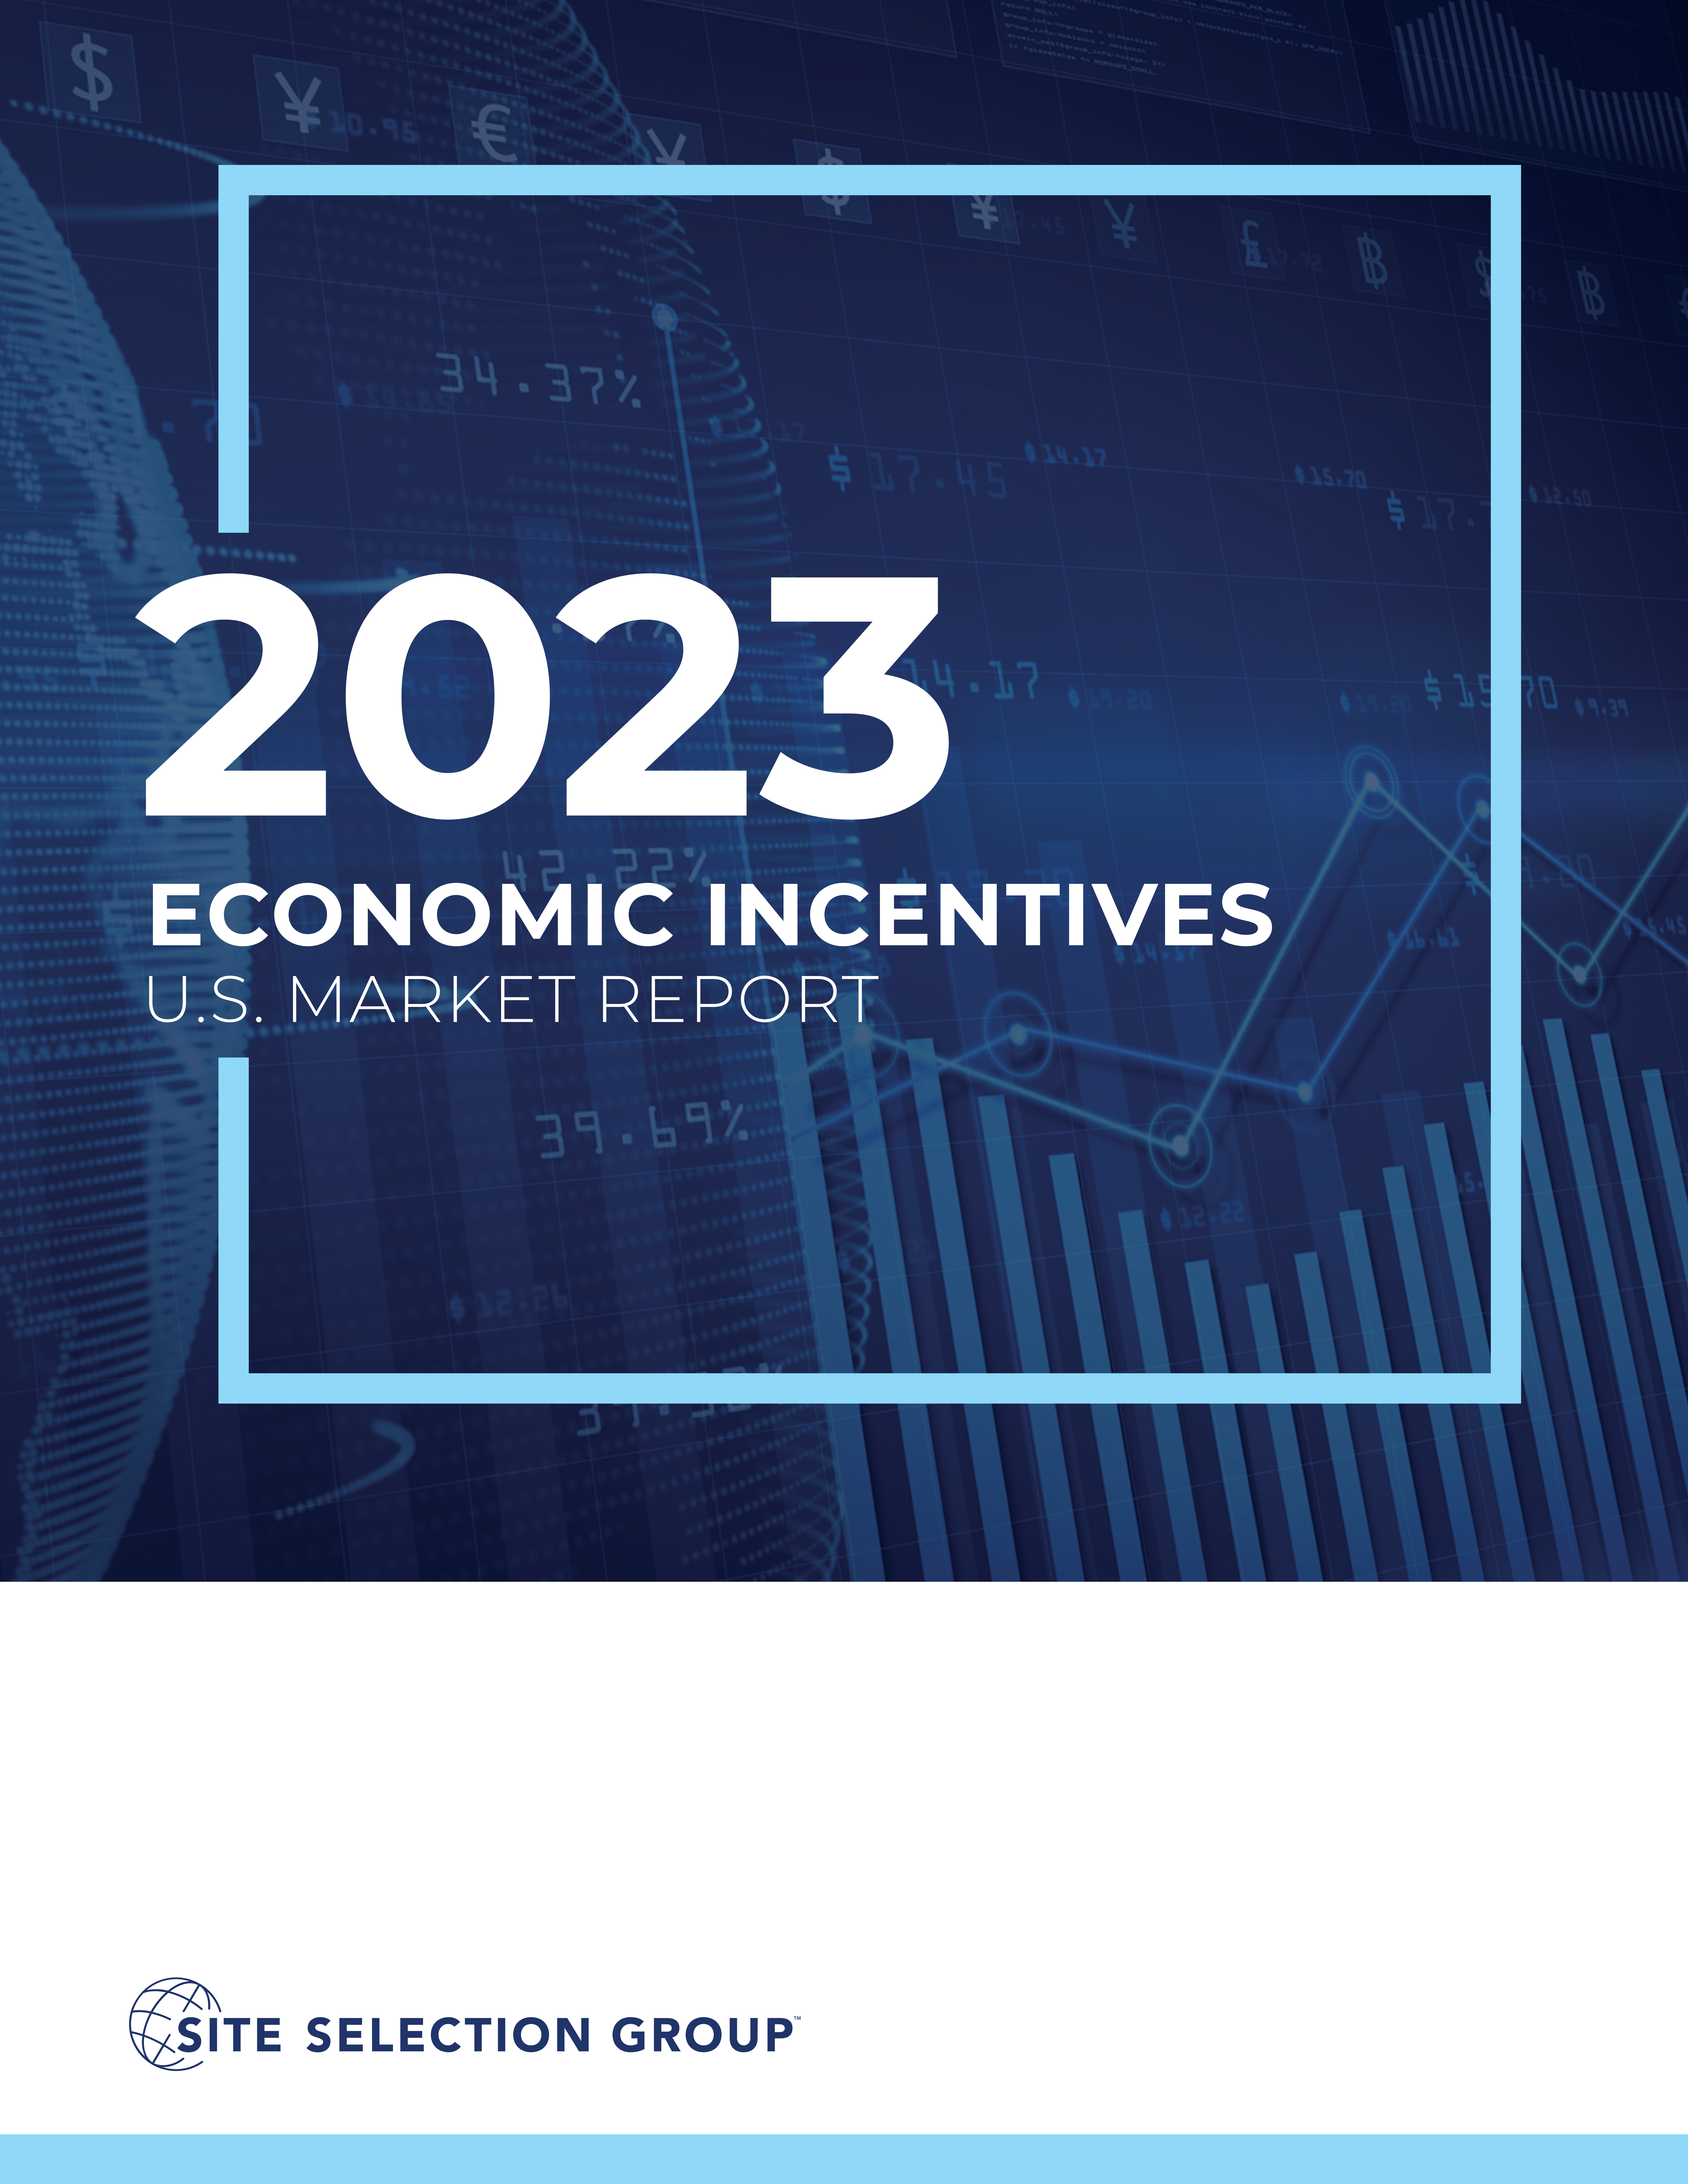 SSG-2023 Economic Incentives U.S. Market Report-Cover